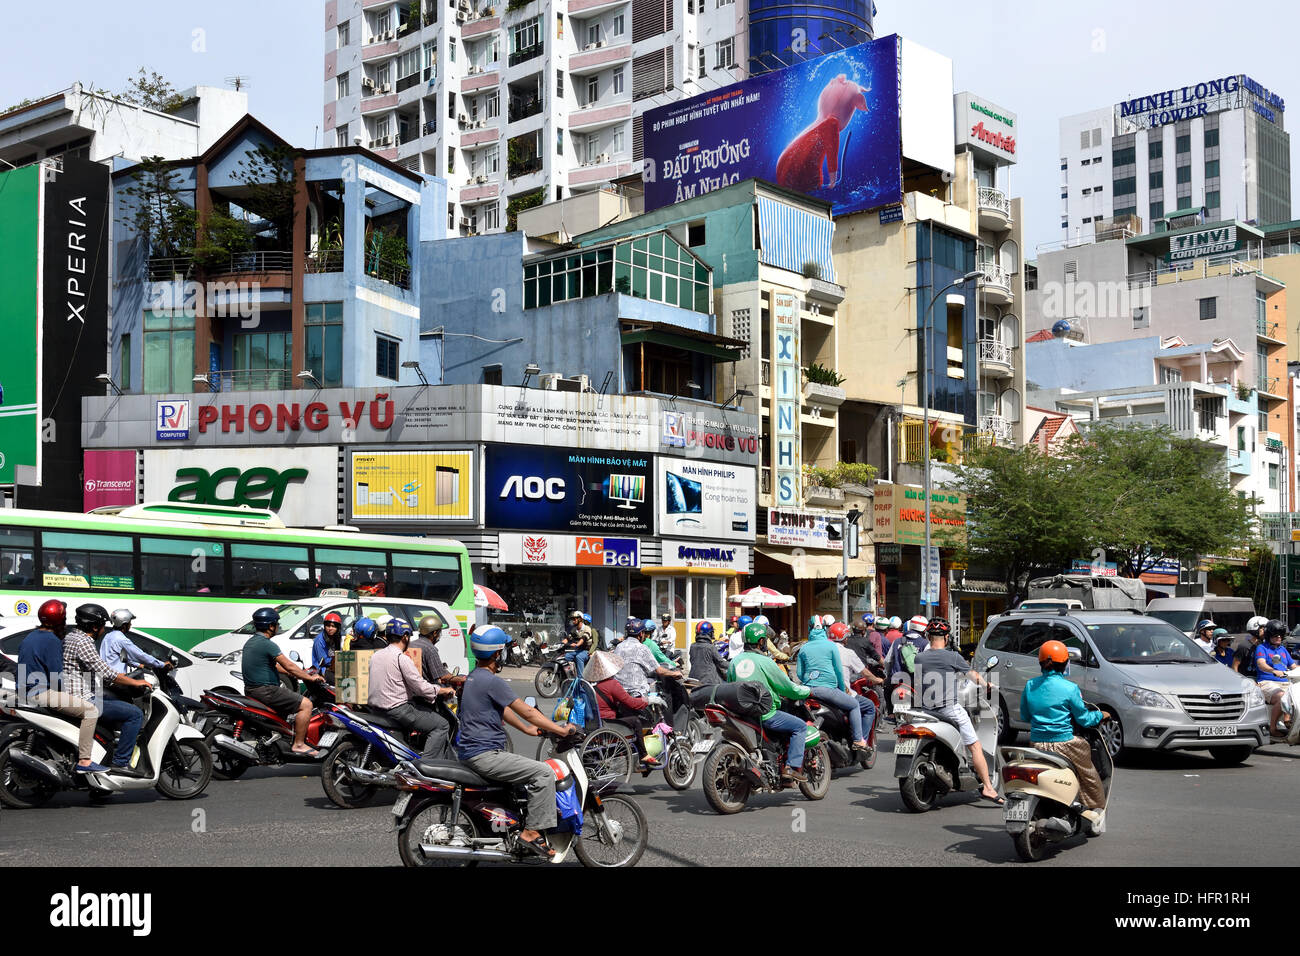 Rush Hour pendolari taxi auto scooter motocicli Pham Viet Chanh street - Nga Sau Cong Hoa Città di Ho Chi Minh (Saigon) Vietnam Foto Stock